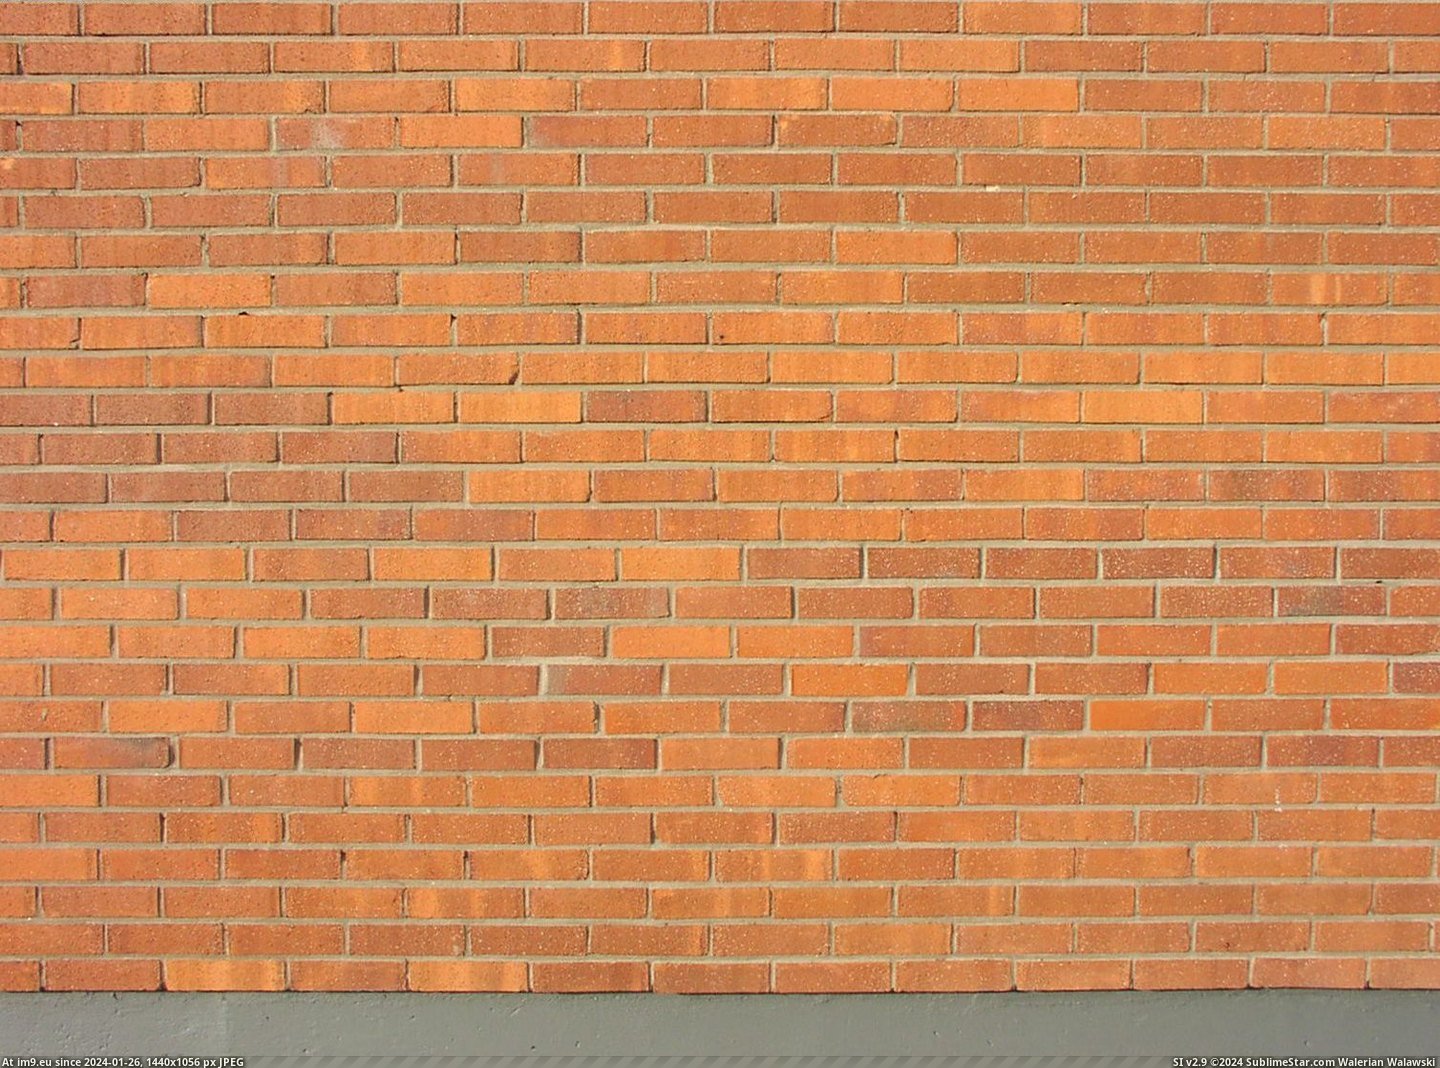 Brick Small Brown 3 (brick wall) (in Brick walls textures and wallpapers)